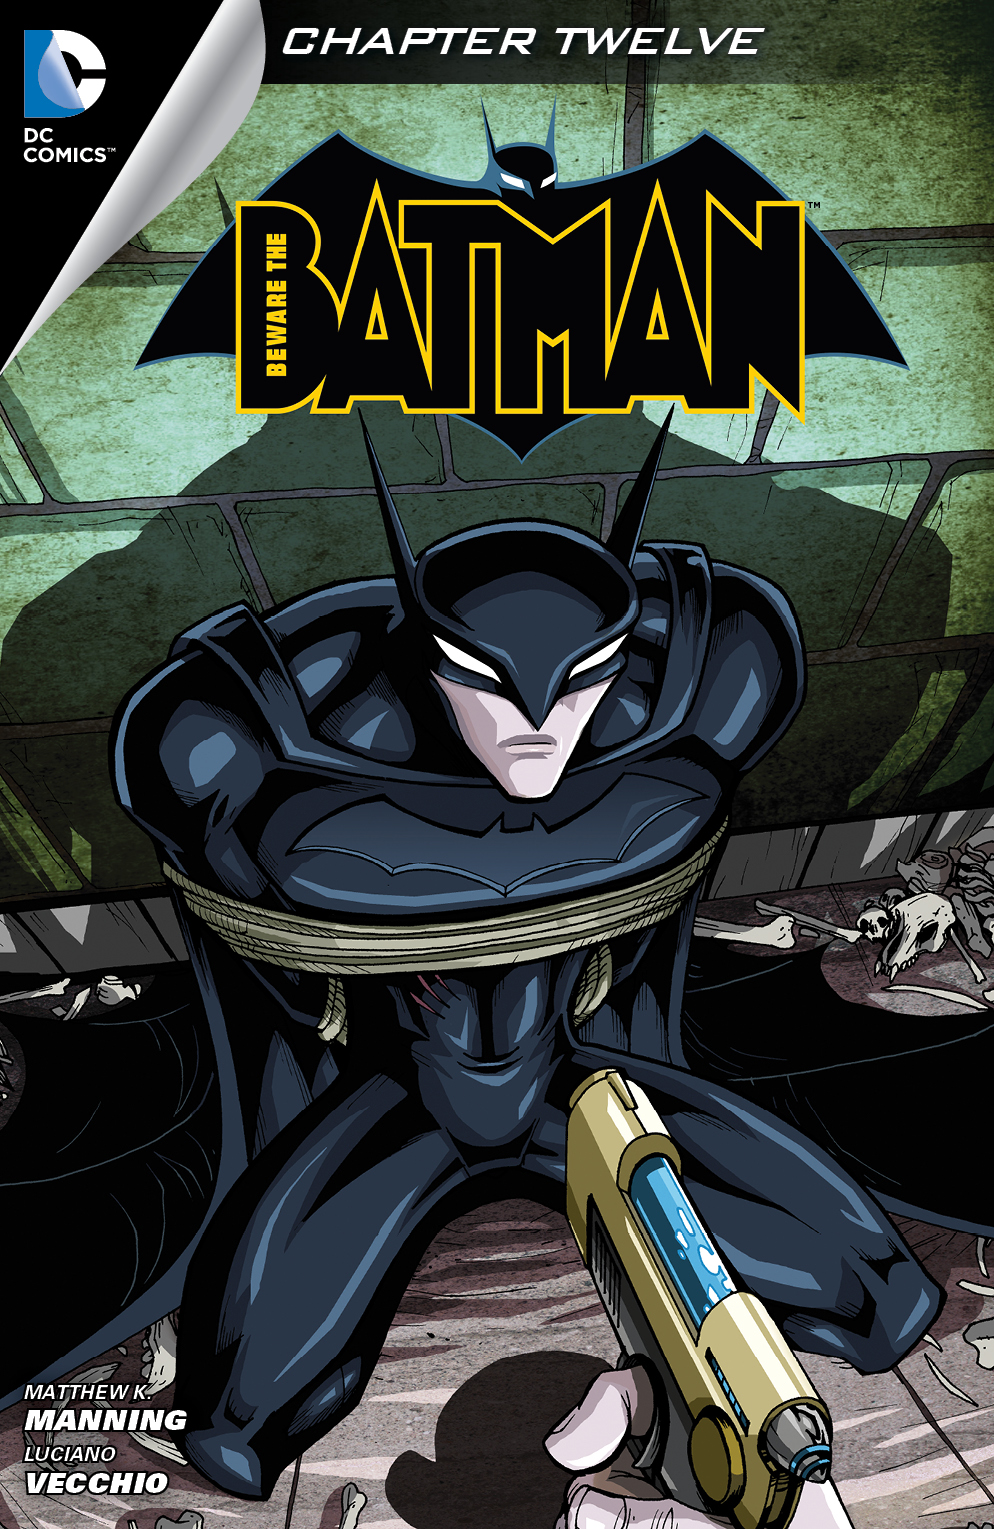 Beware The Batman #12 preview images